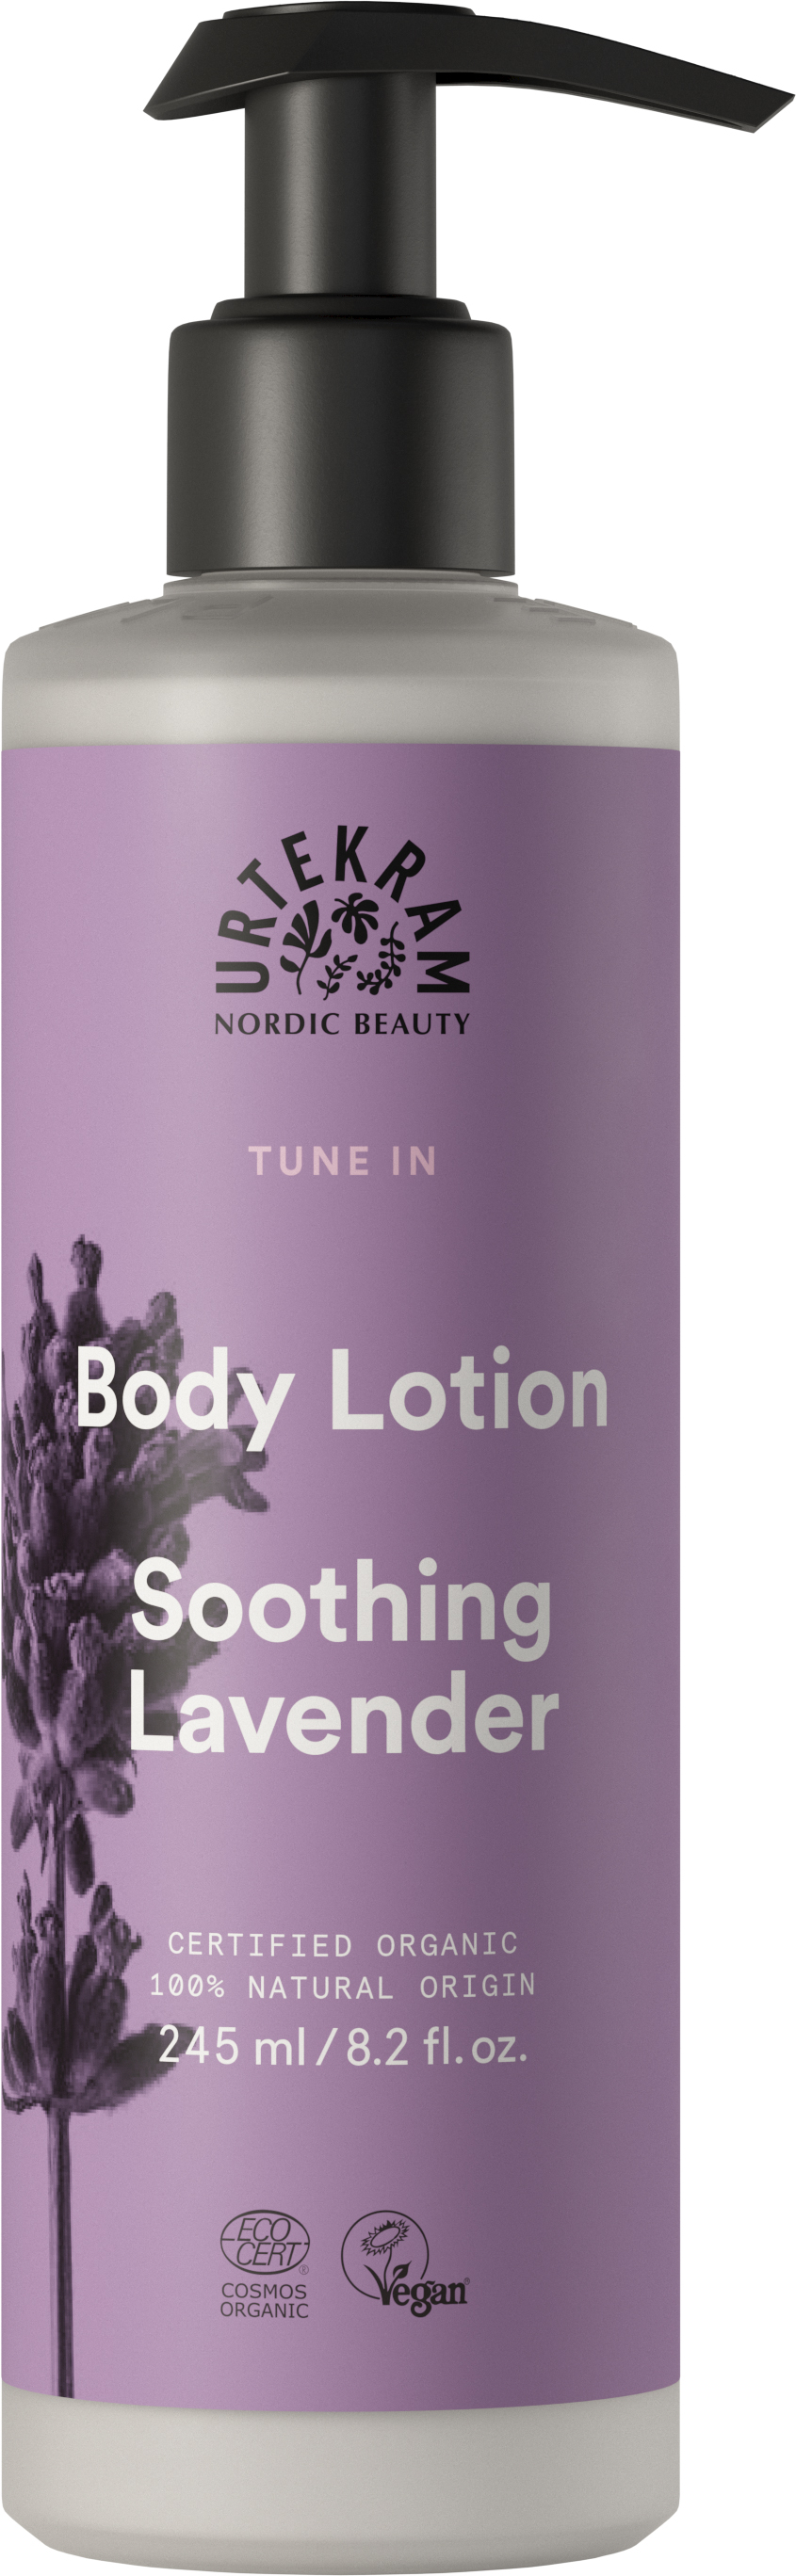 Soothing Lavender Body Lotion - Urtekram